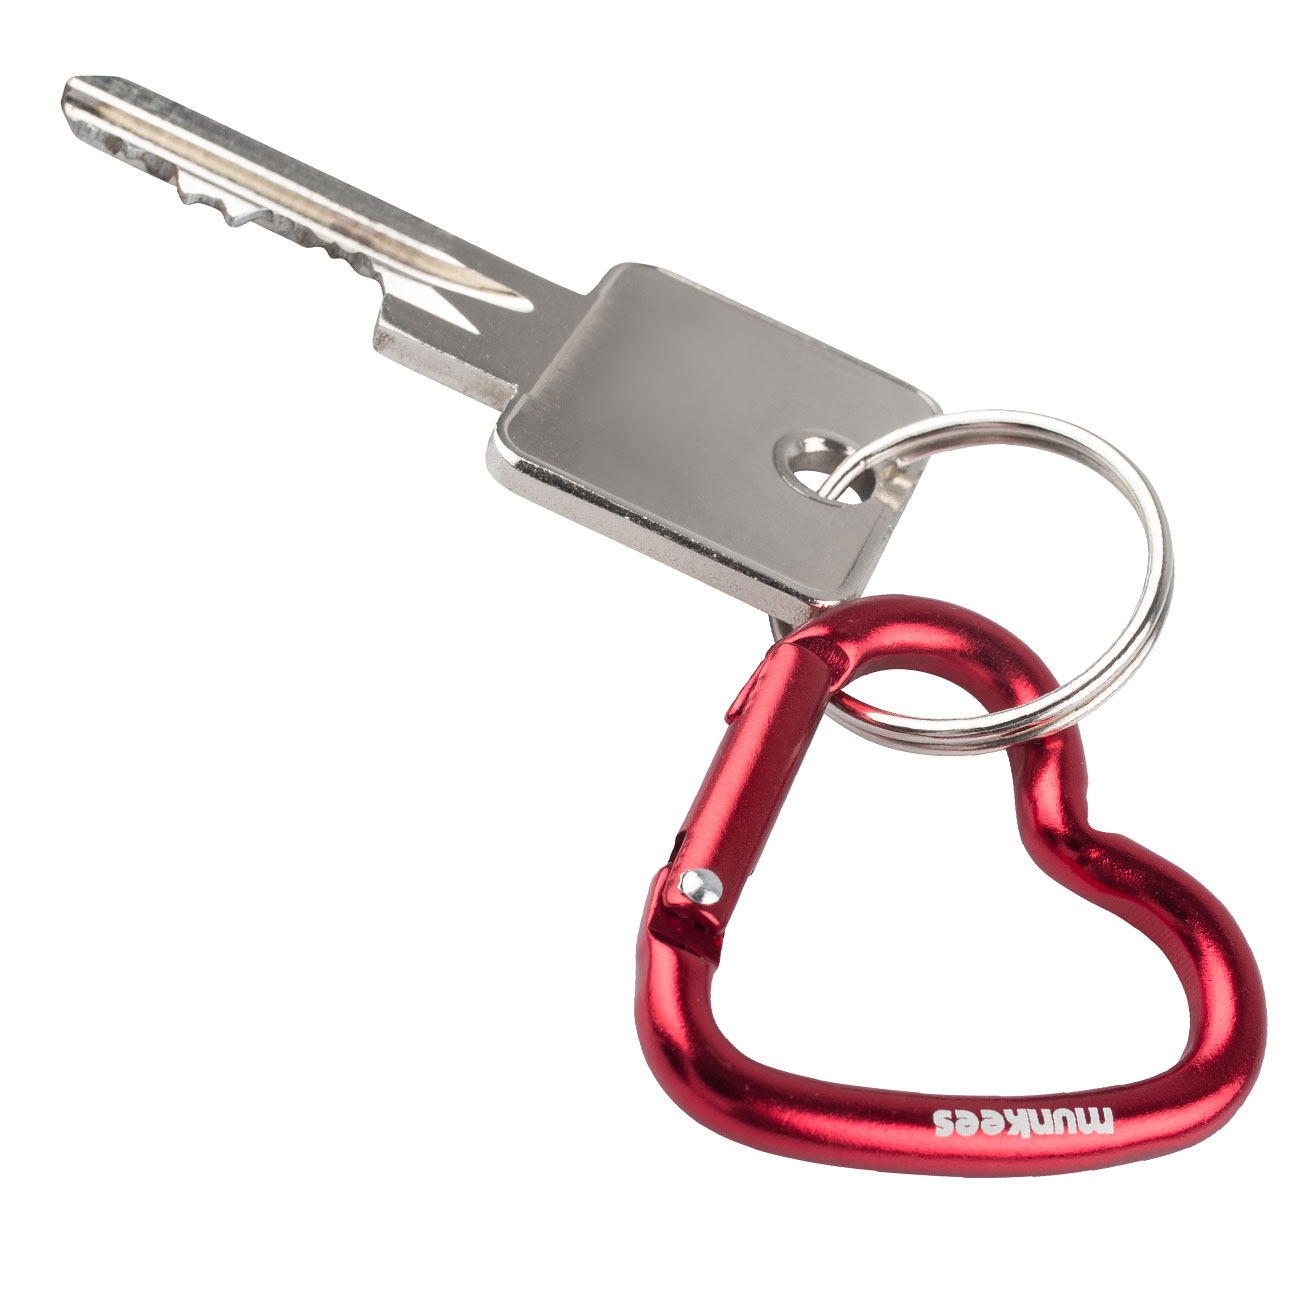 3x Abnehmbar Schlüsselring Schlüsselanhänger Karabinerhaken Sprengringe Key Ring 